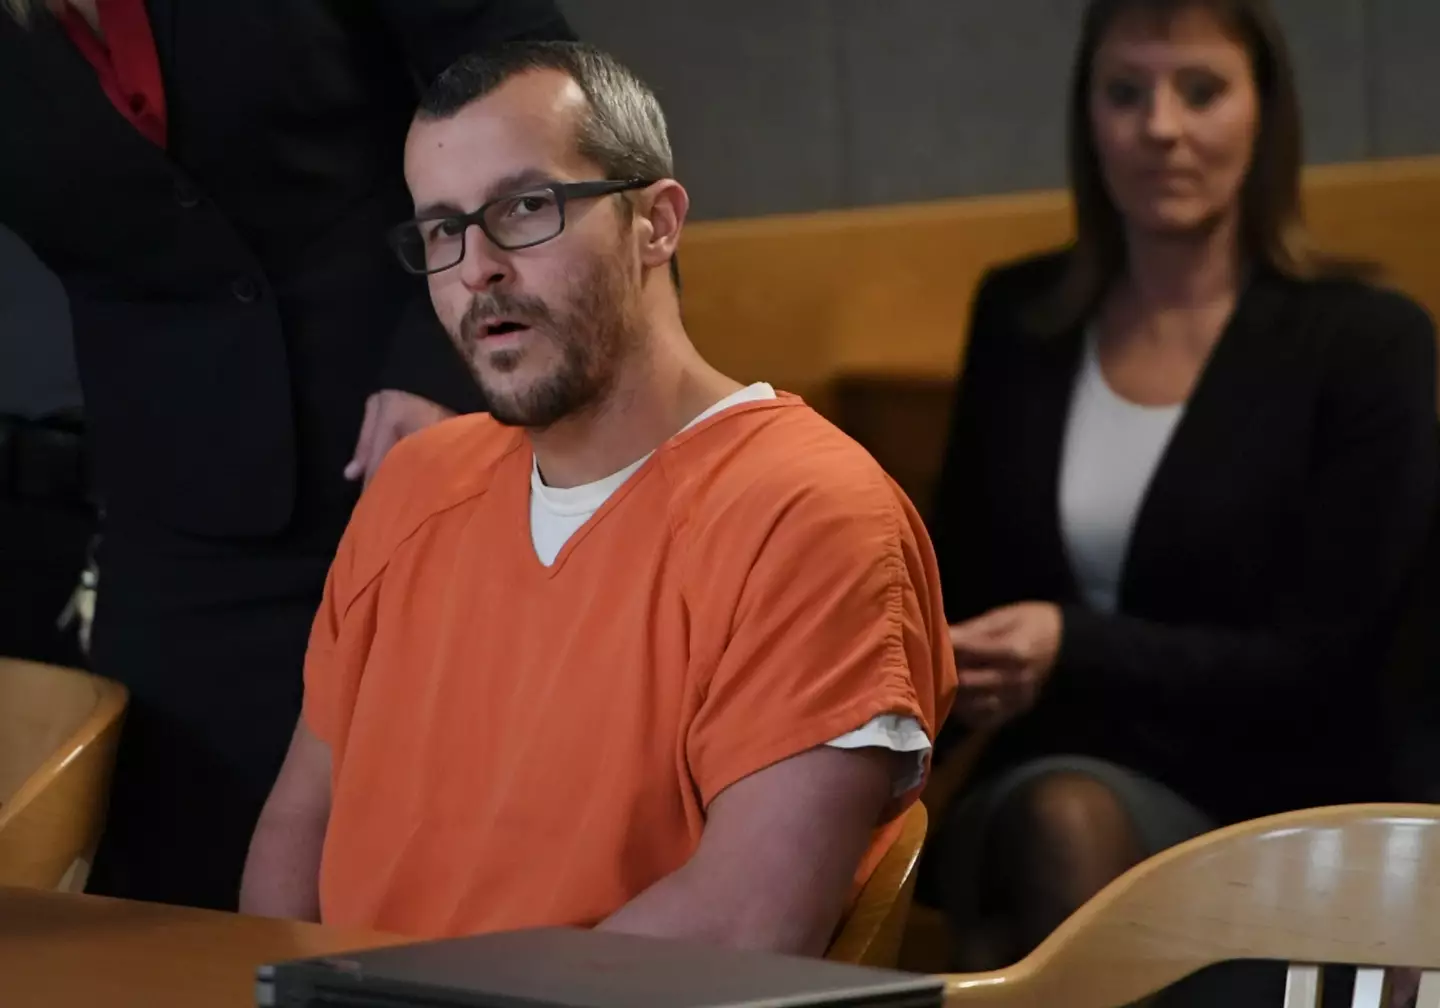 Chris Watts is serving five life sentences for the murders. (RJ Sangosti/The Denver Post via Getty Images)